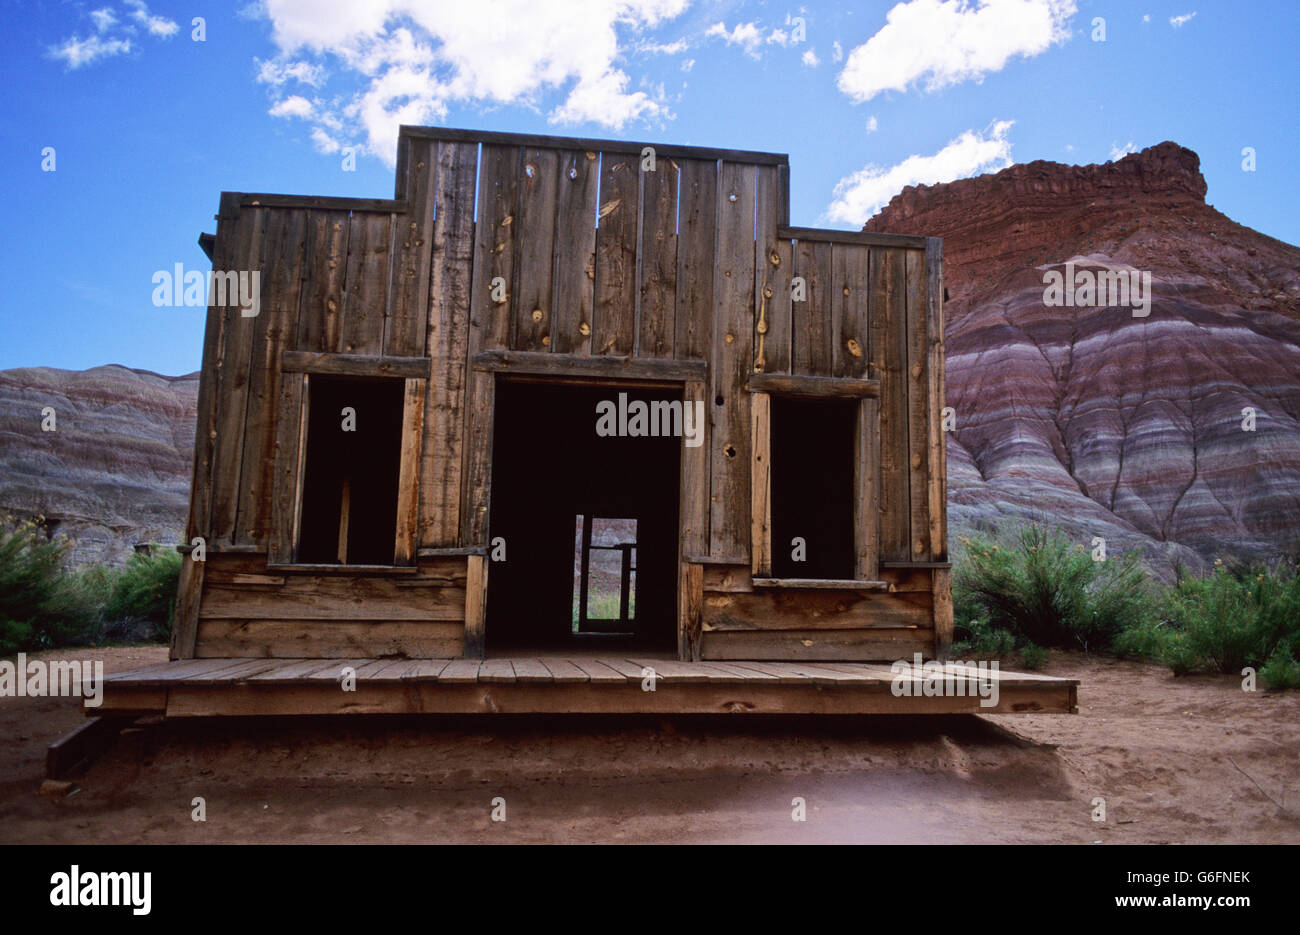 The Old Paria Movie Set near Kanab, Utah, USA. Stock Photo